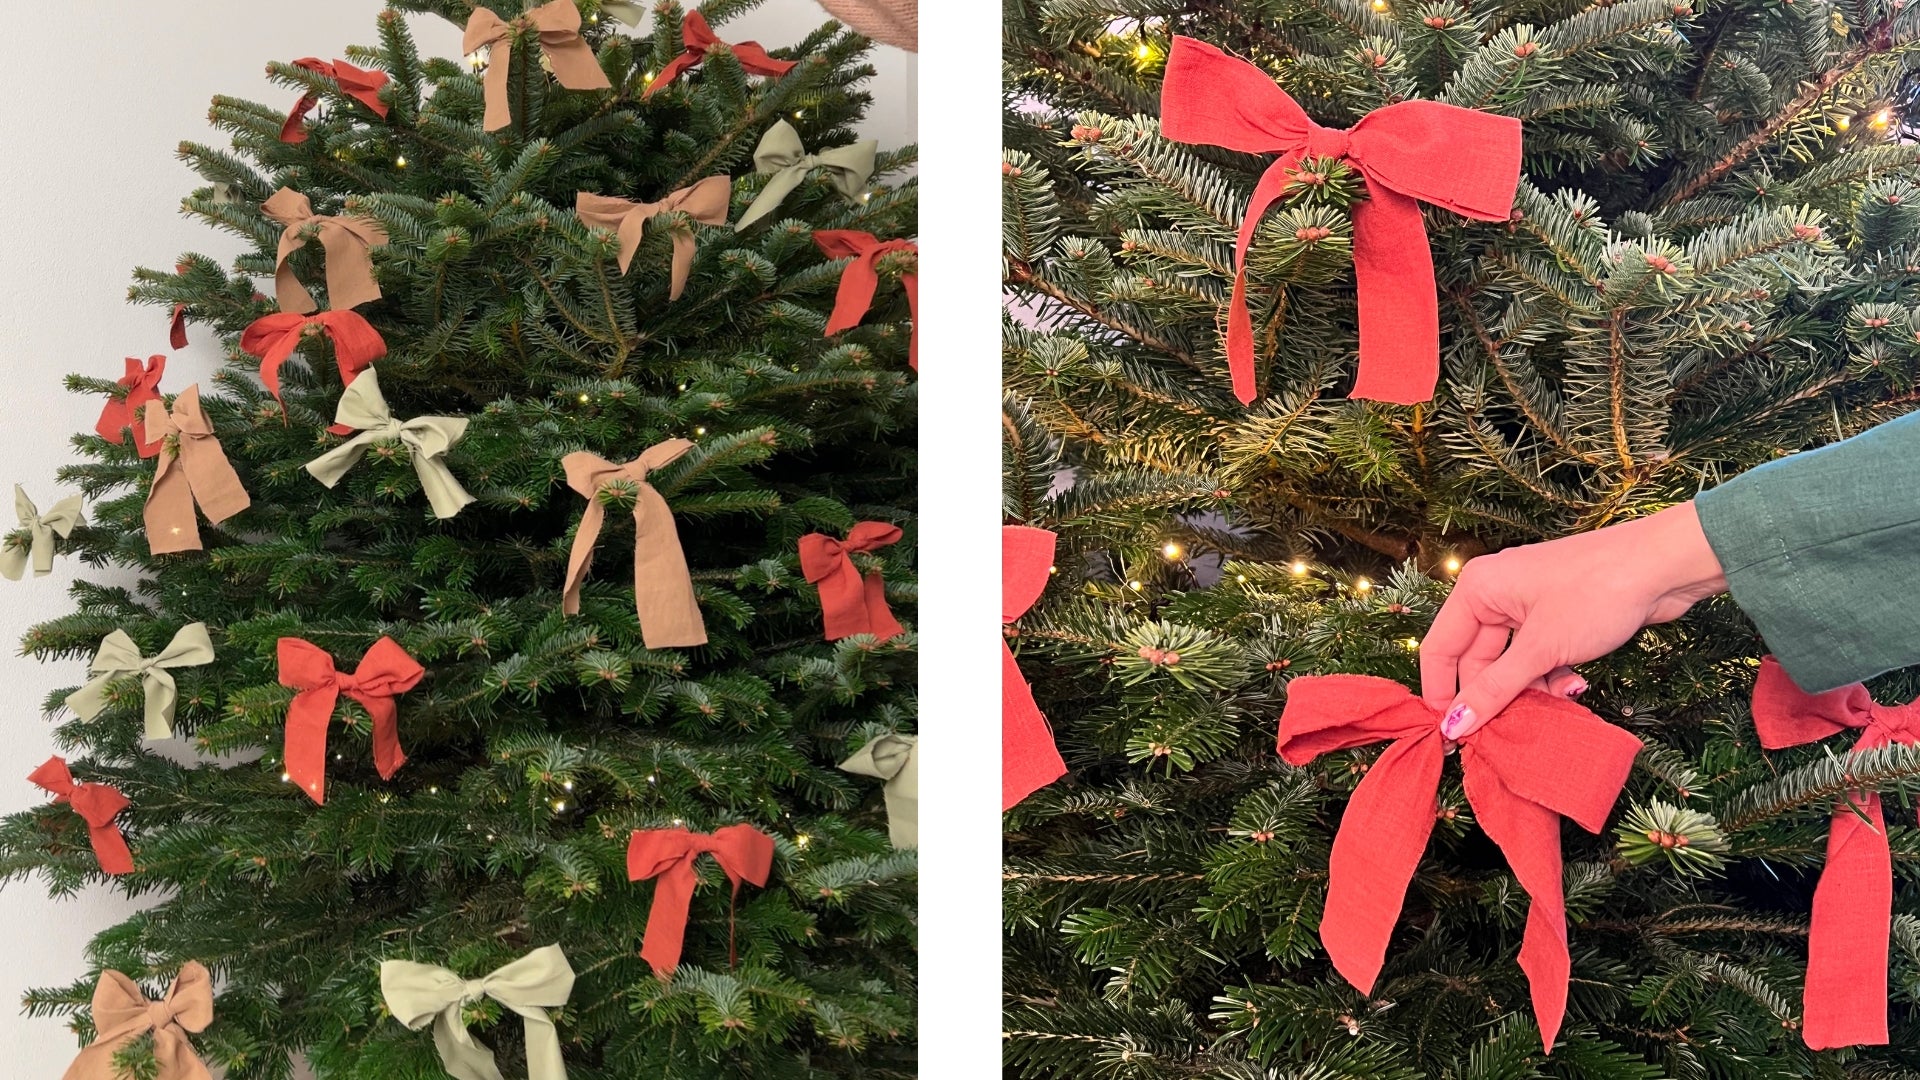 MagicLinen's Zero-Waste Christmas Decorations